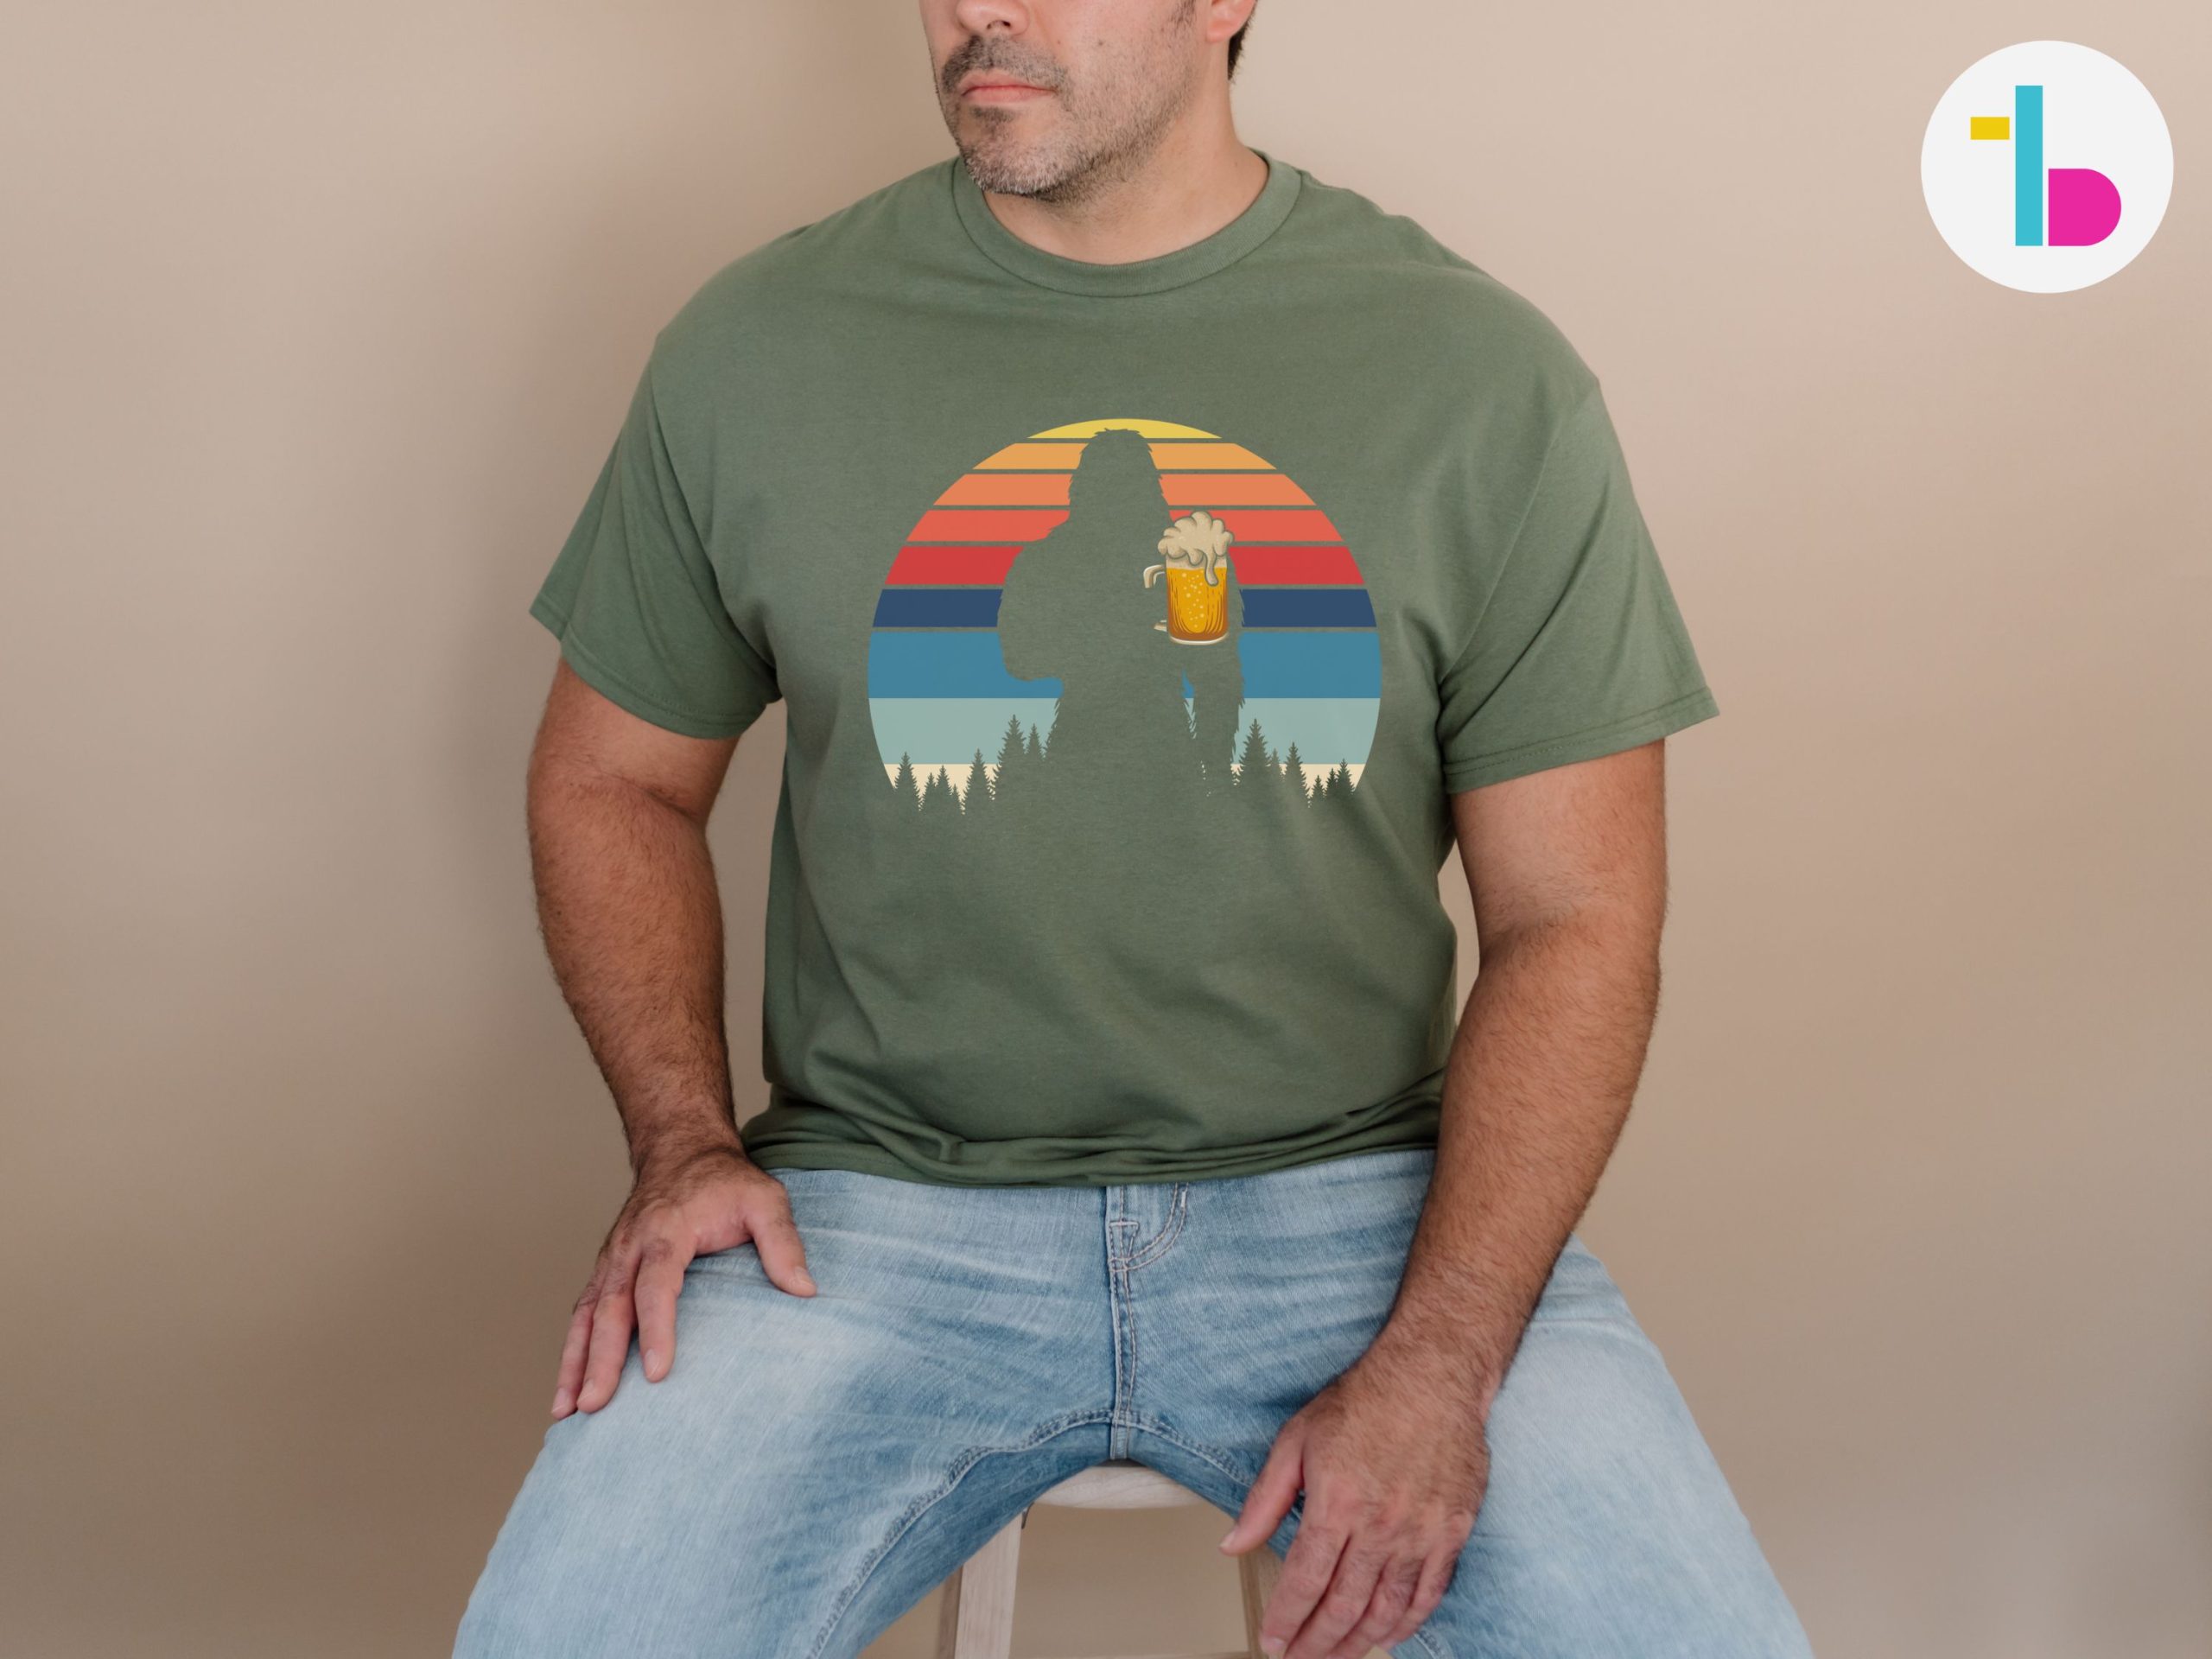 Bigfoot having beer shirt, Beer lover shirt, Beer lover gift